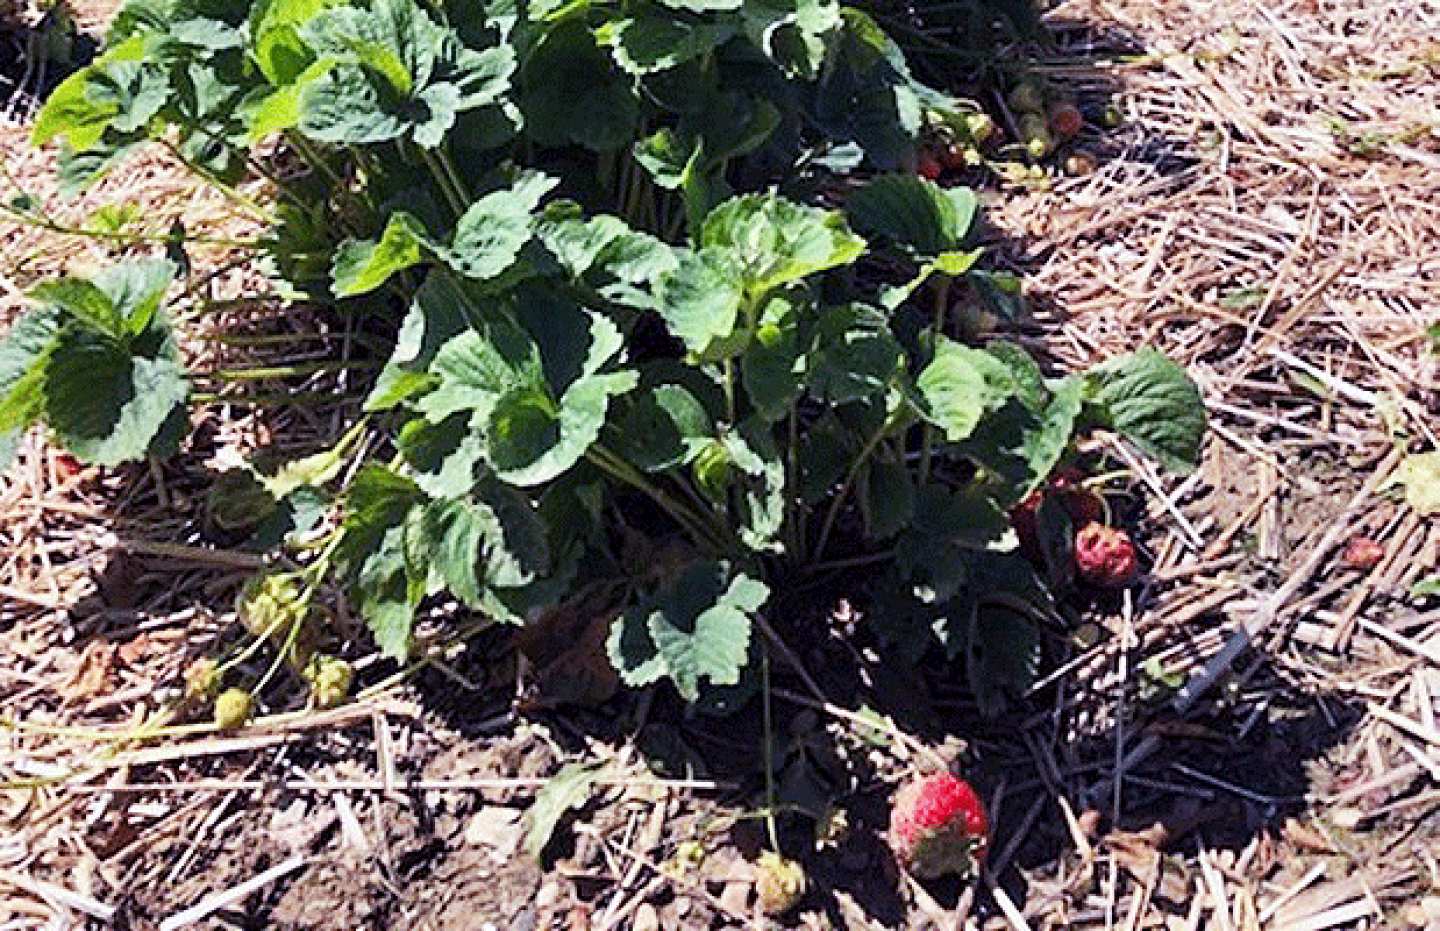 Rhode Island strawberry fields with mulching, July 1, 2019.